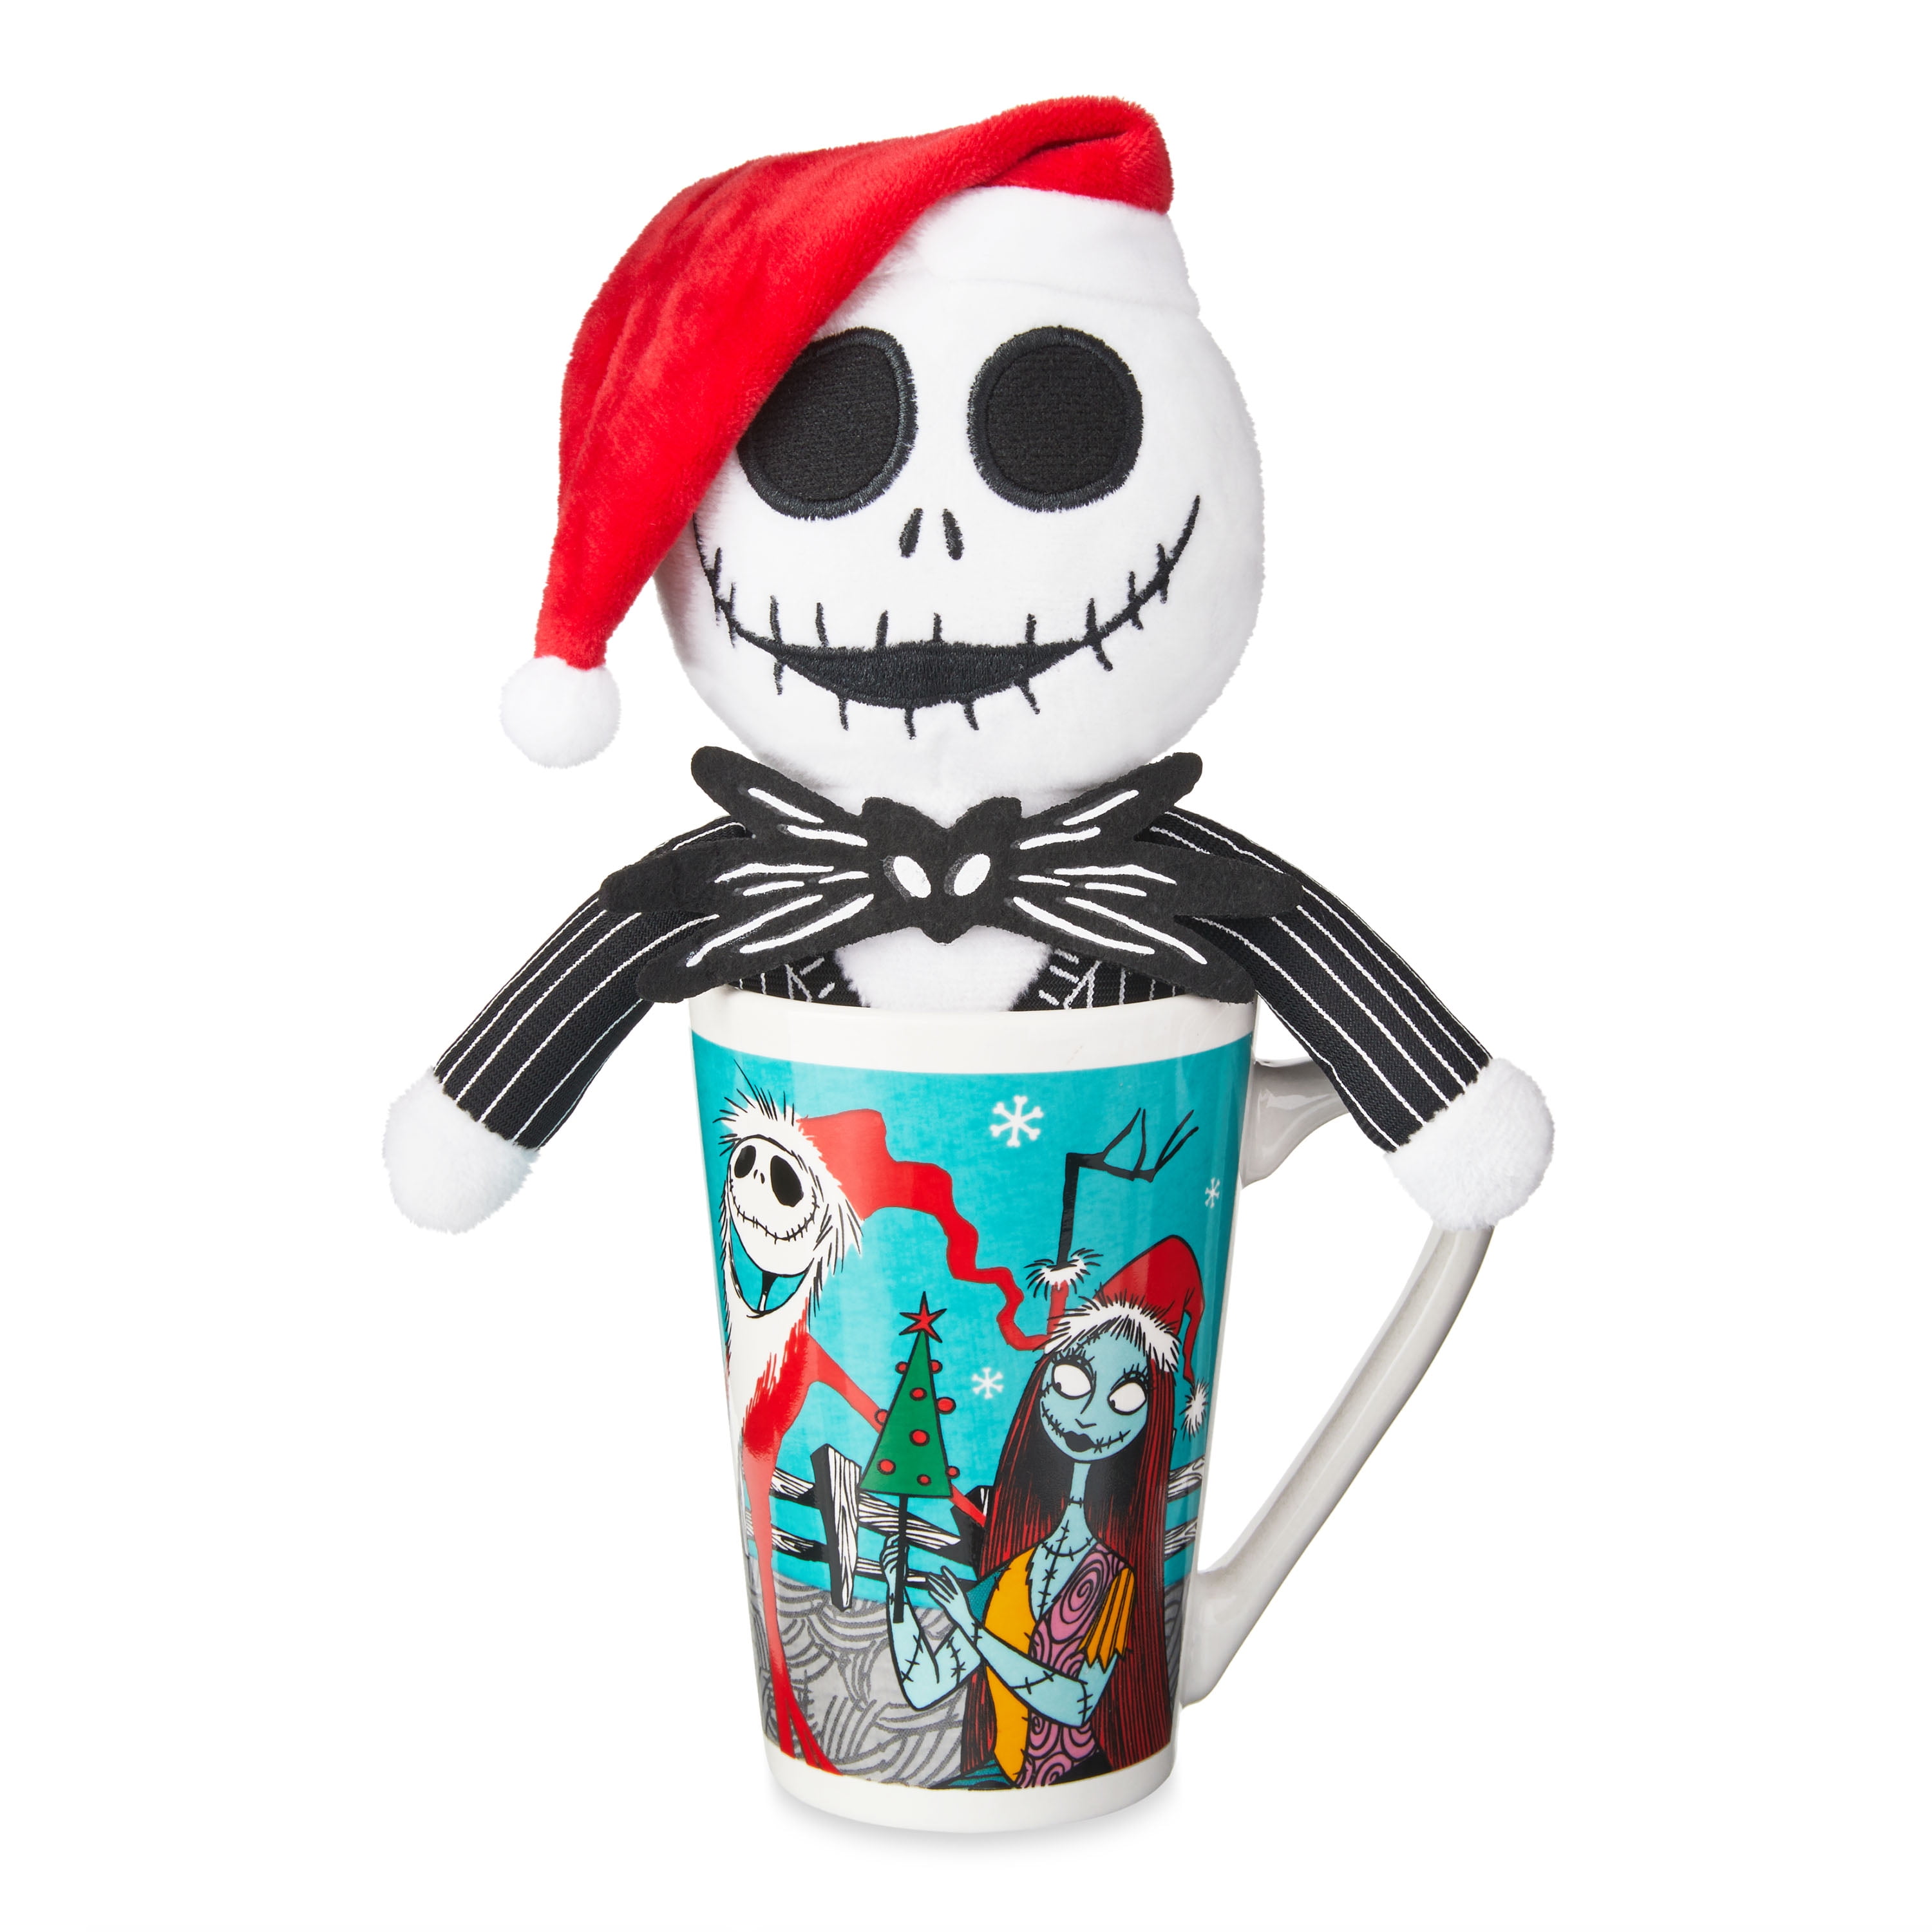 Disney, The Nightmare Before Christmas Latte Mug with Holiday Jack Skellington Plush, 14OZ Ceramic Mug